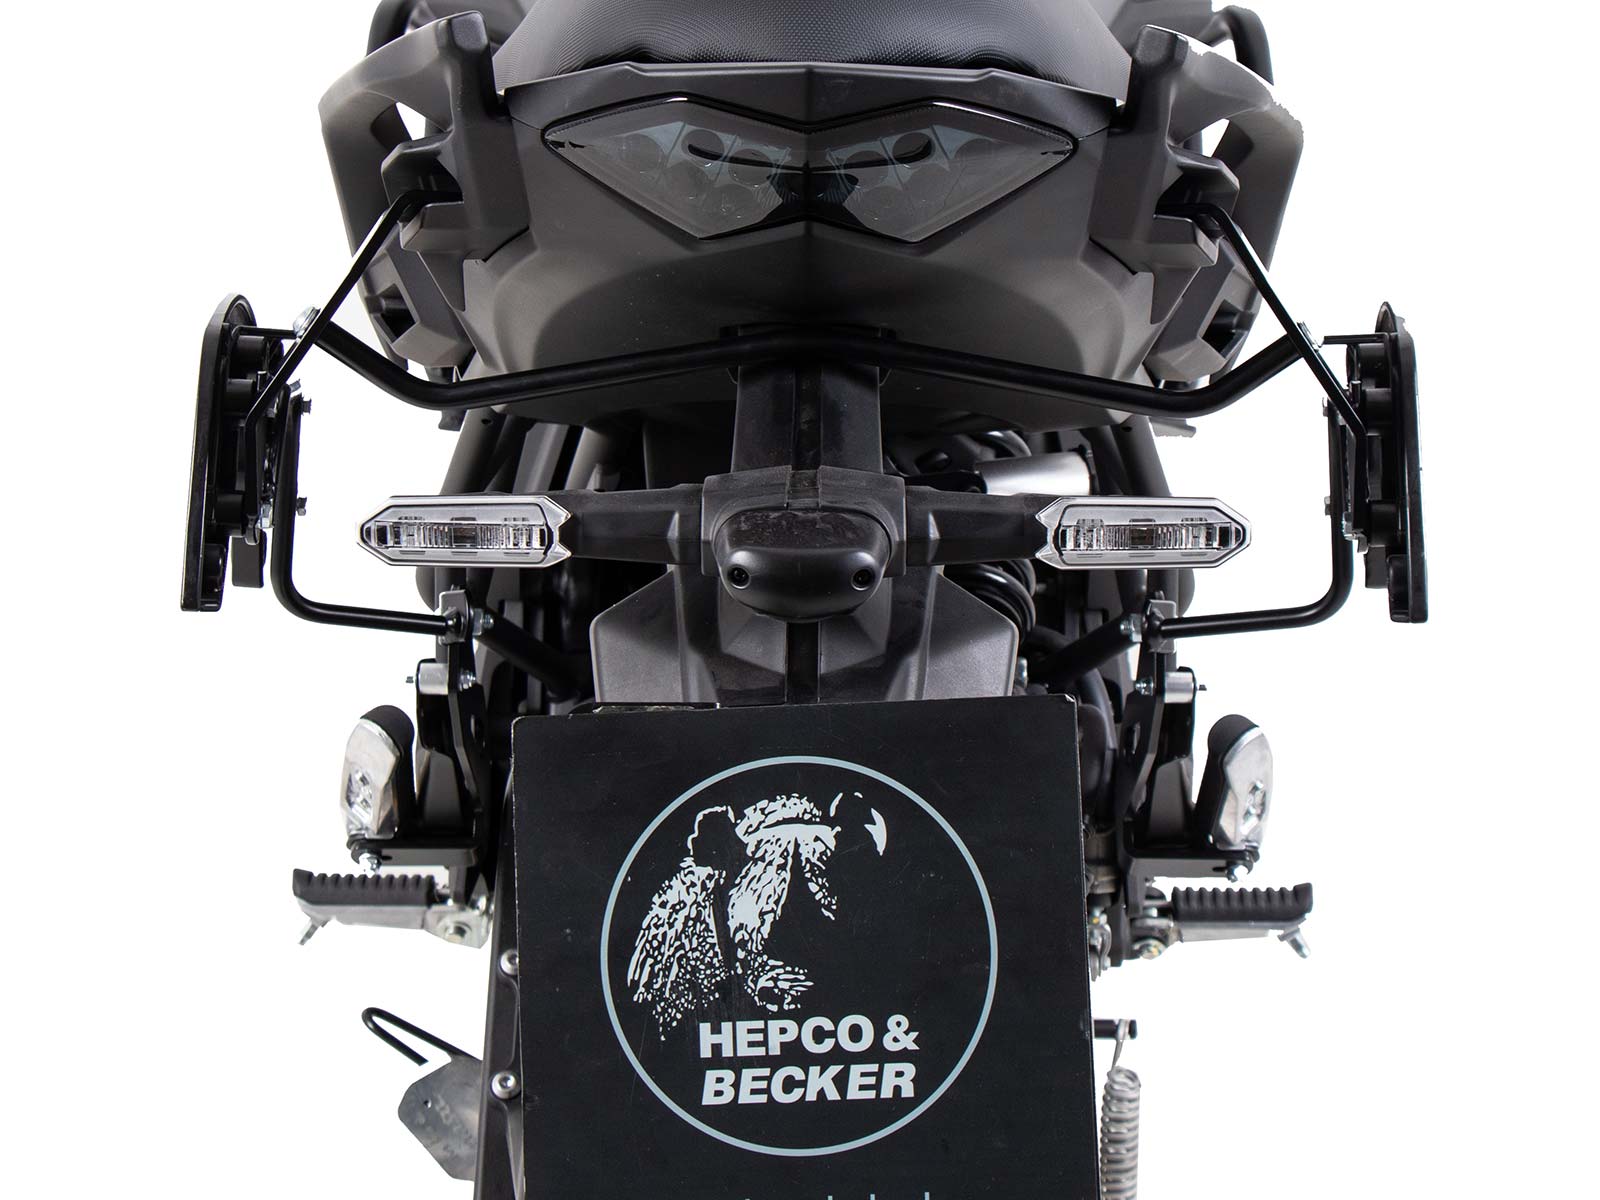 Accessori moto BMW: Givi, Kappa, Sw-motech, Hepco Becker Pyramid